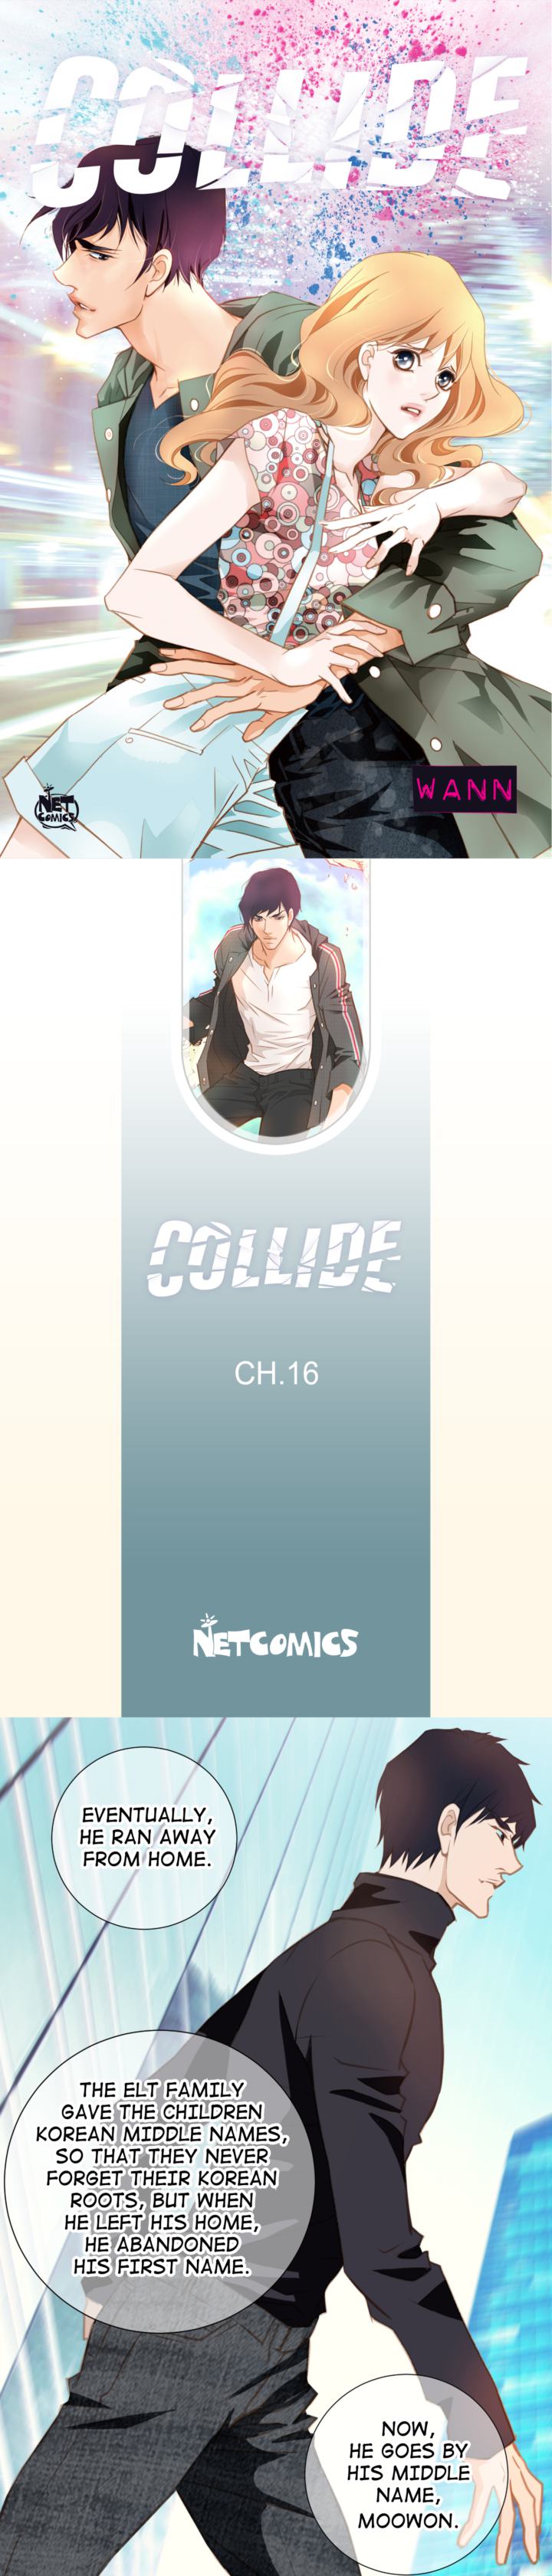 Collide Ch.16